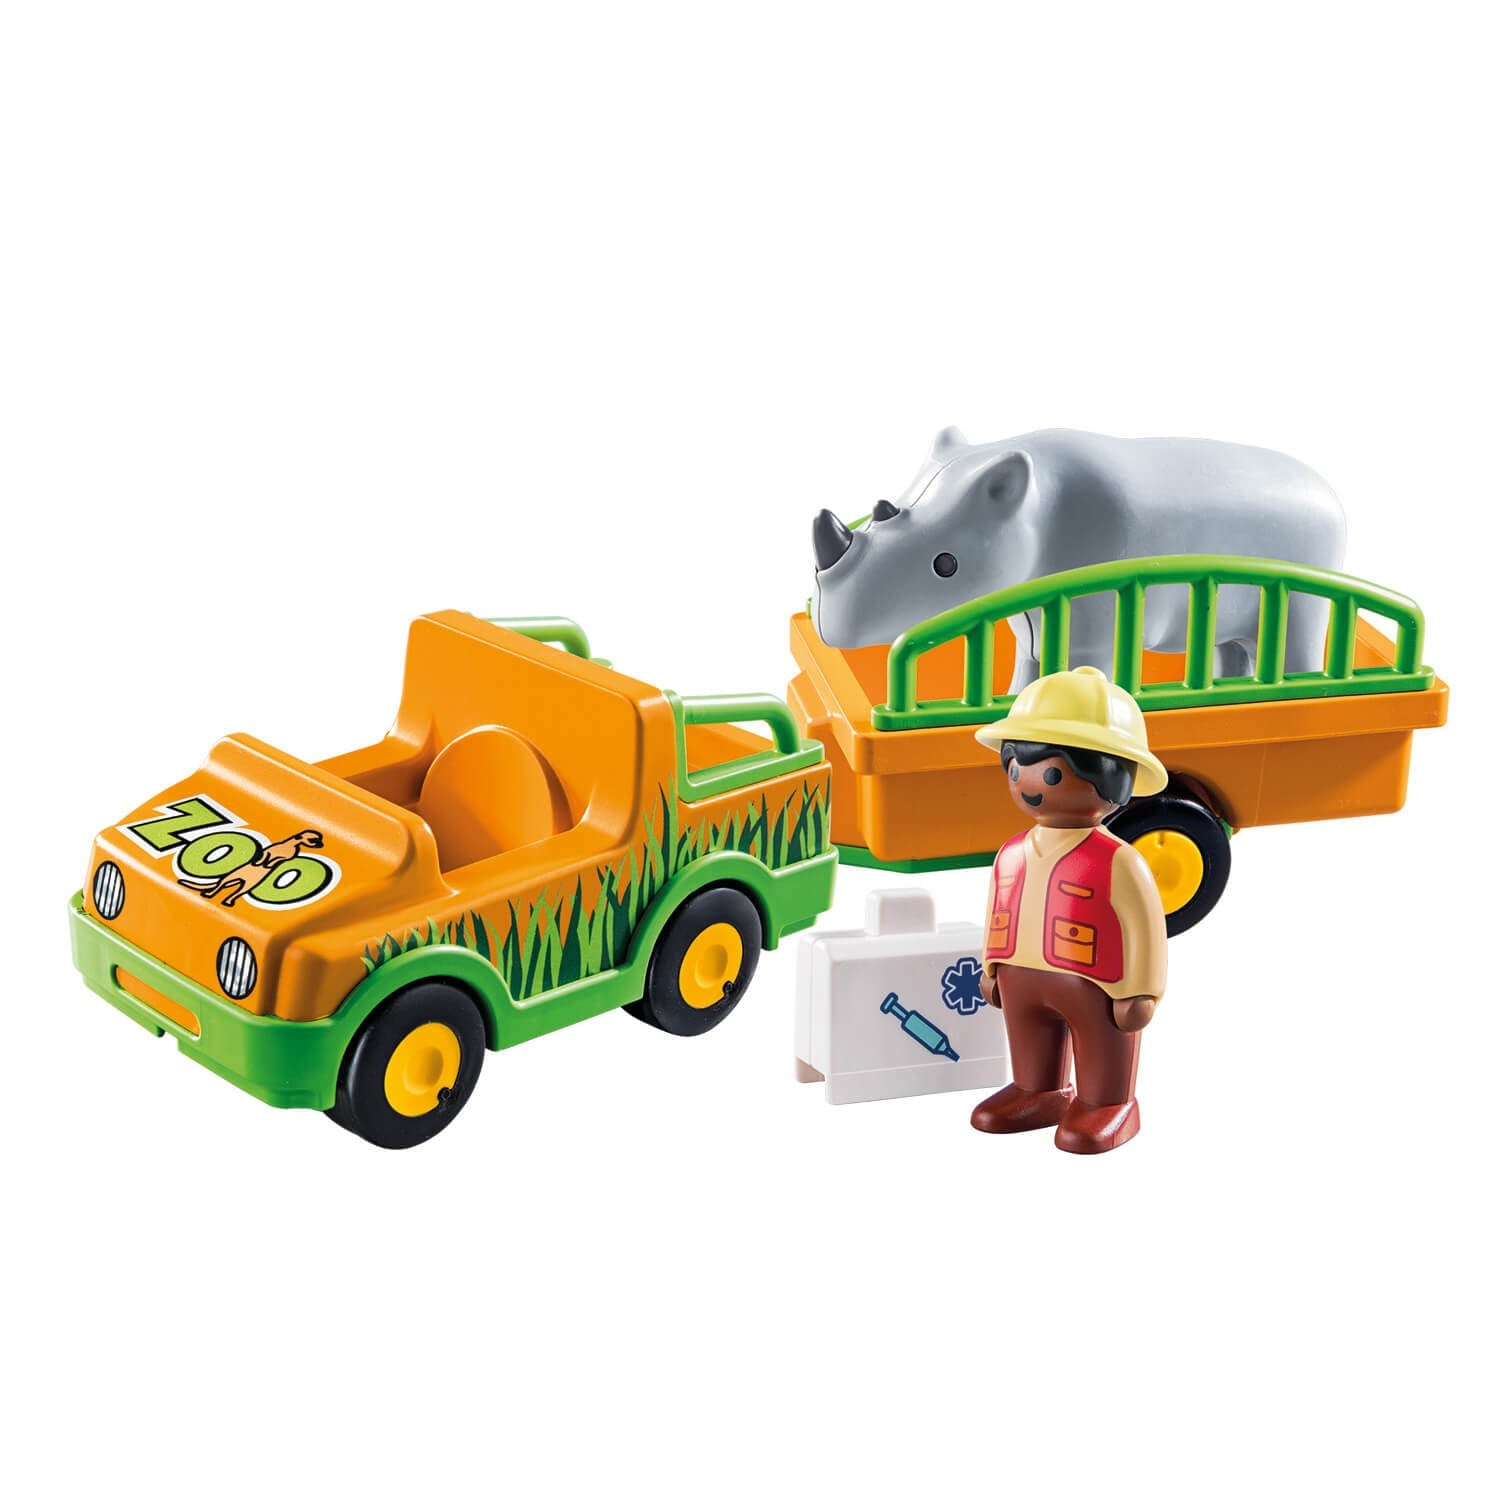 PLAYMOBIL 1.2.3 Zoo Vehicle with Rhinoceros (70182)